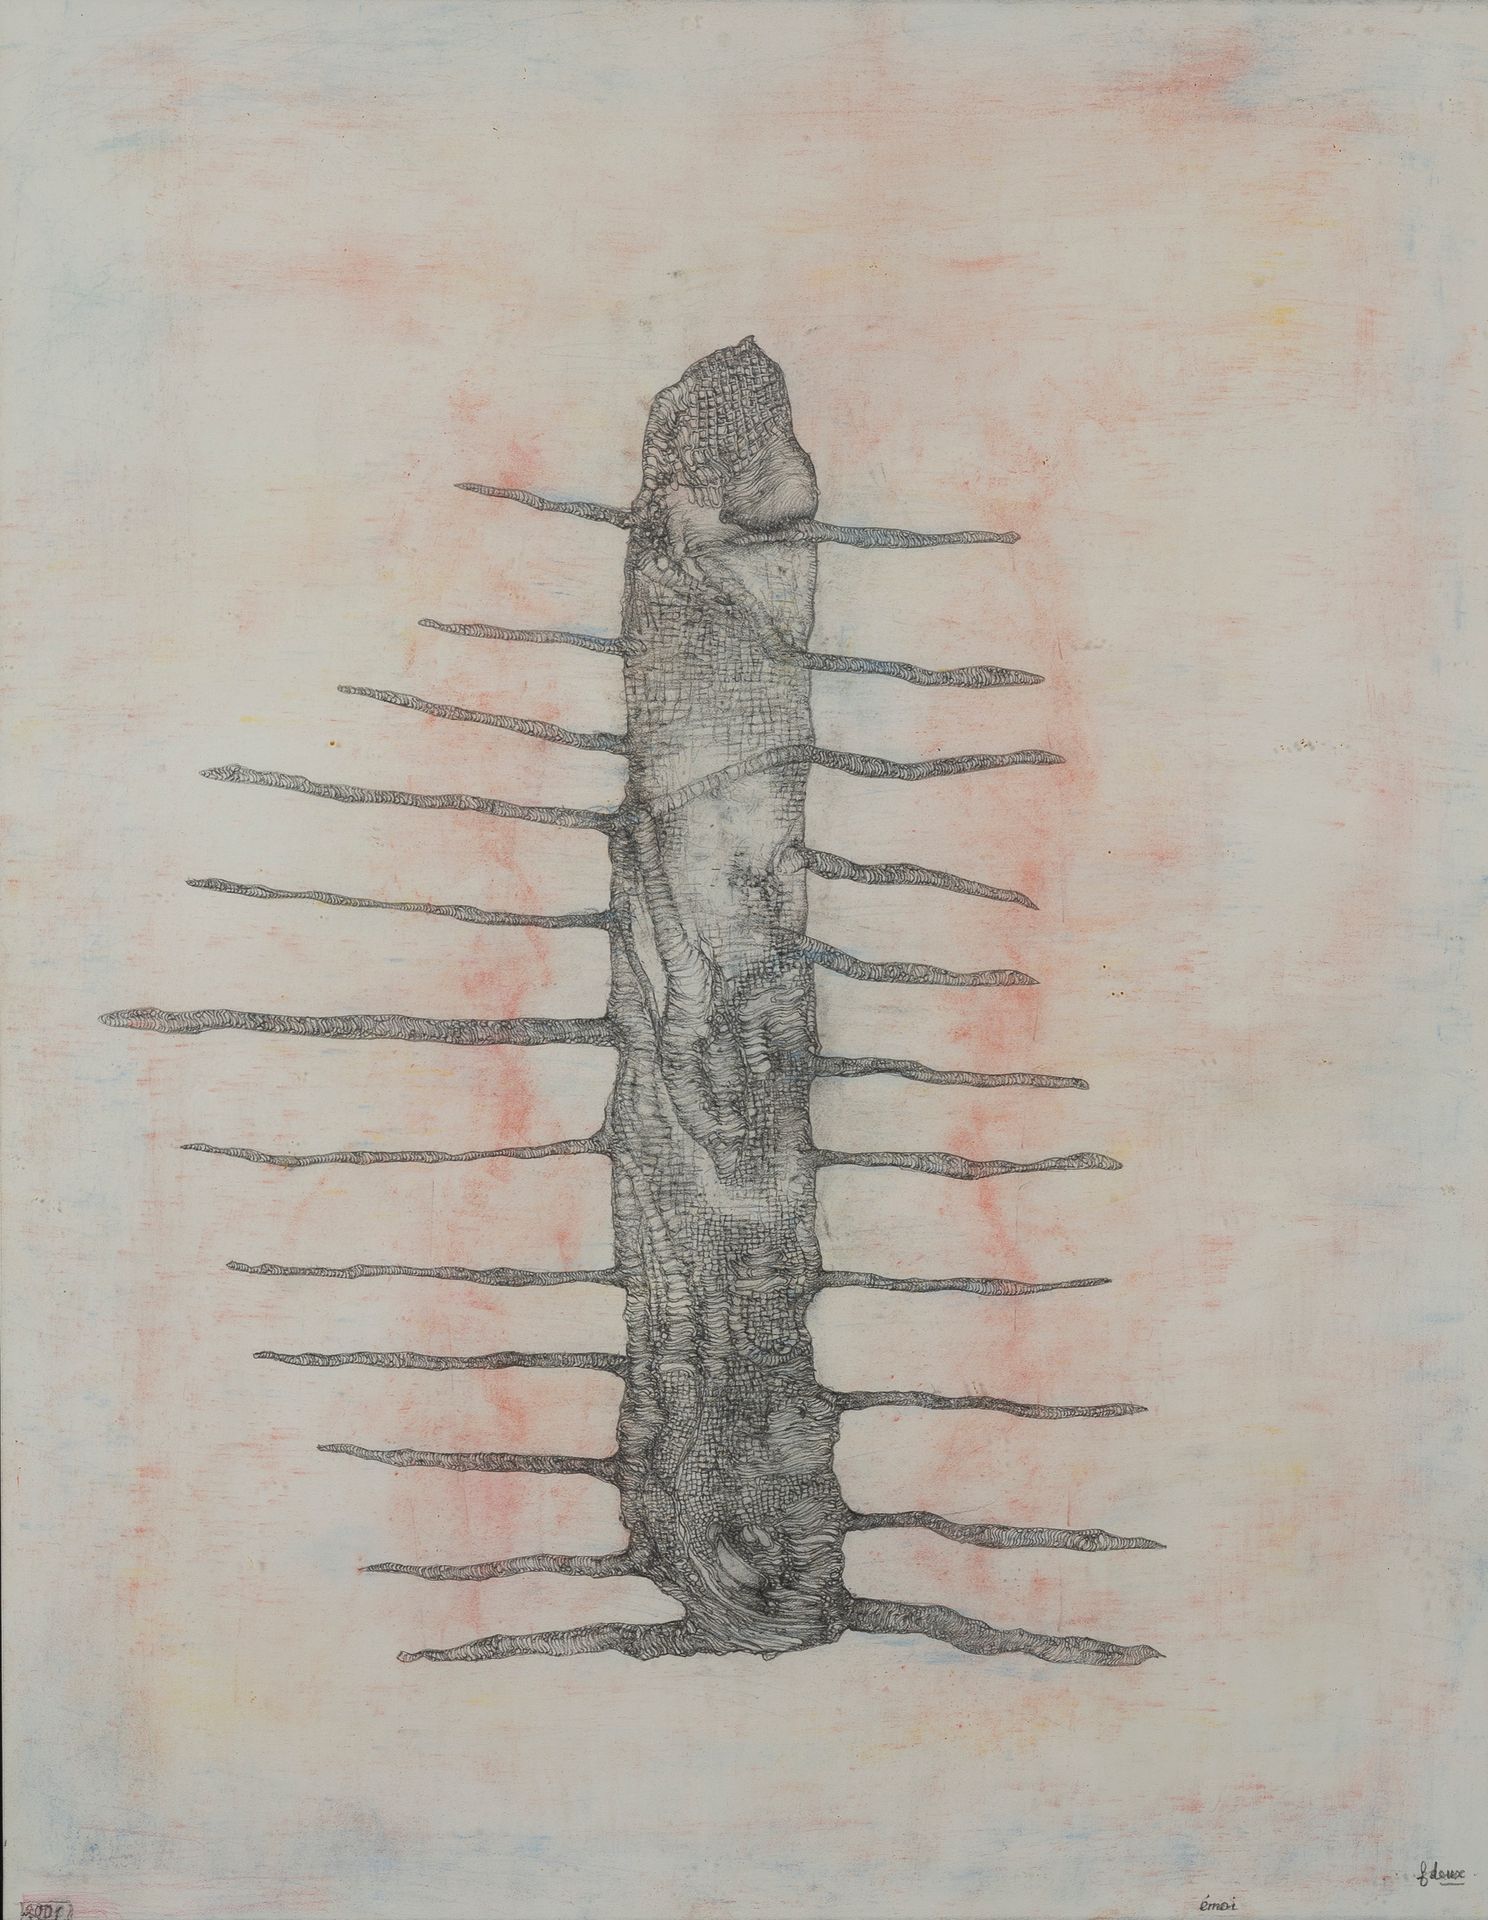 Null 弗雷德-德乌克斯（1924-2015

"Emoi", 2001

纸上铅笔，右下角有签名，中间下方有标题，左下角有日期。

57 x 44 厘米